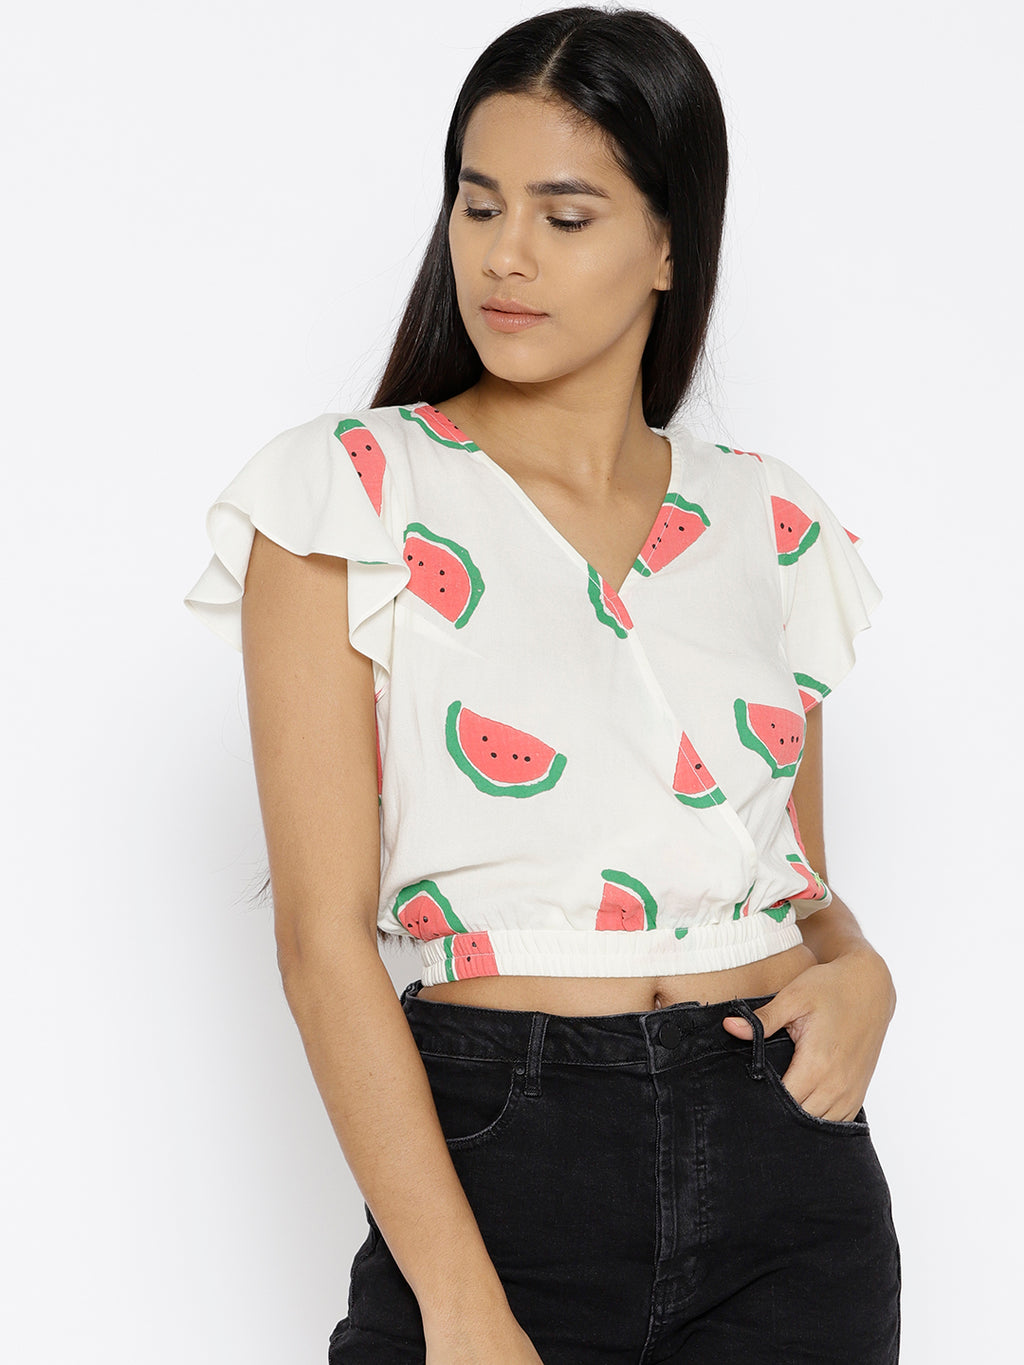 Over lap Watermelon printed crop top